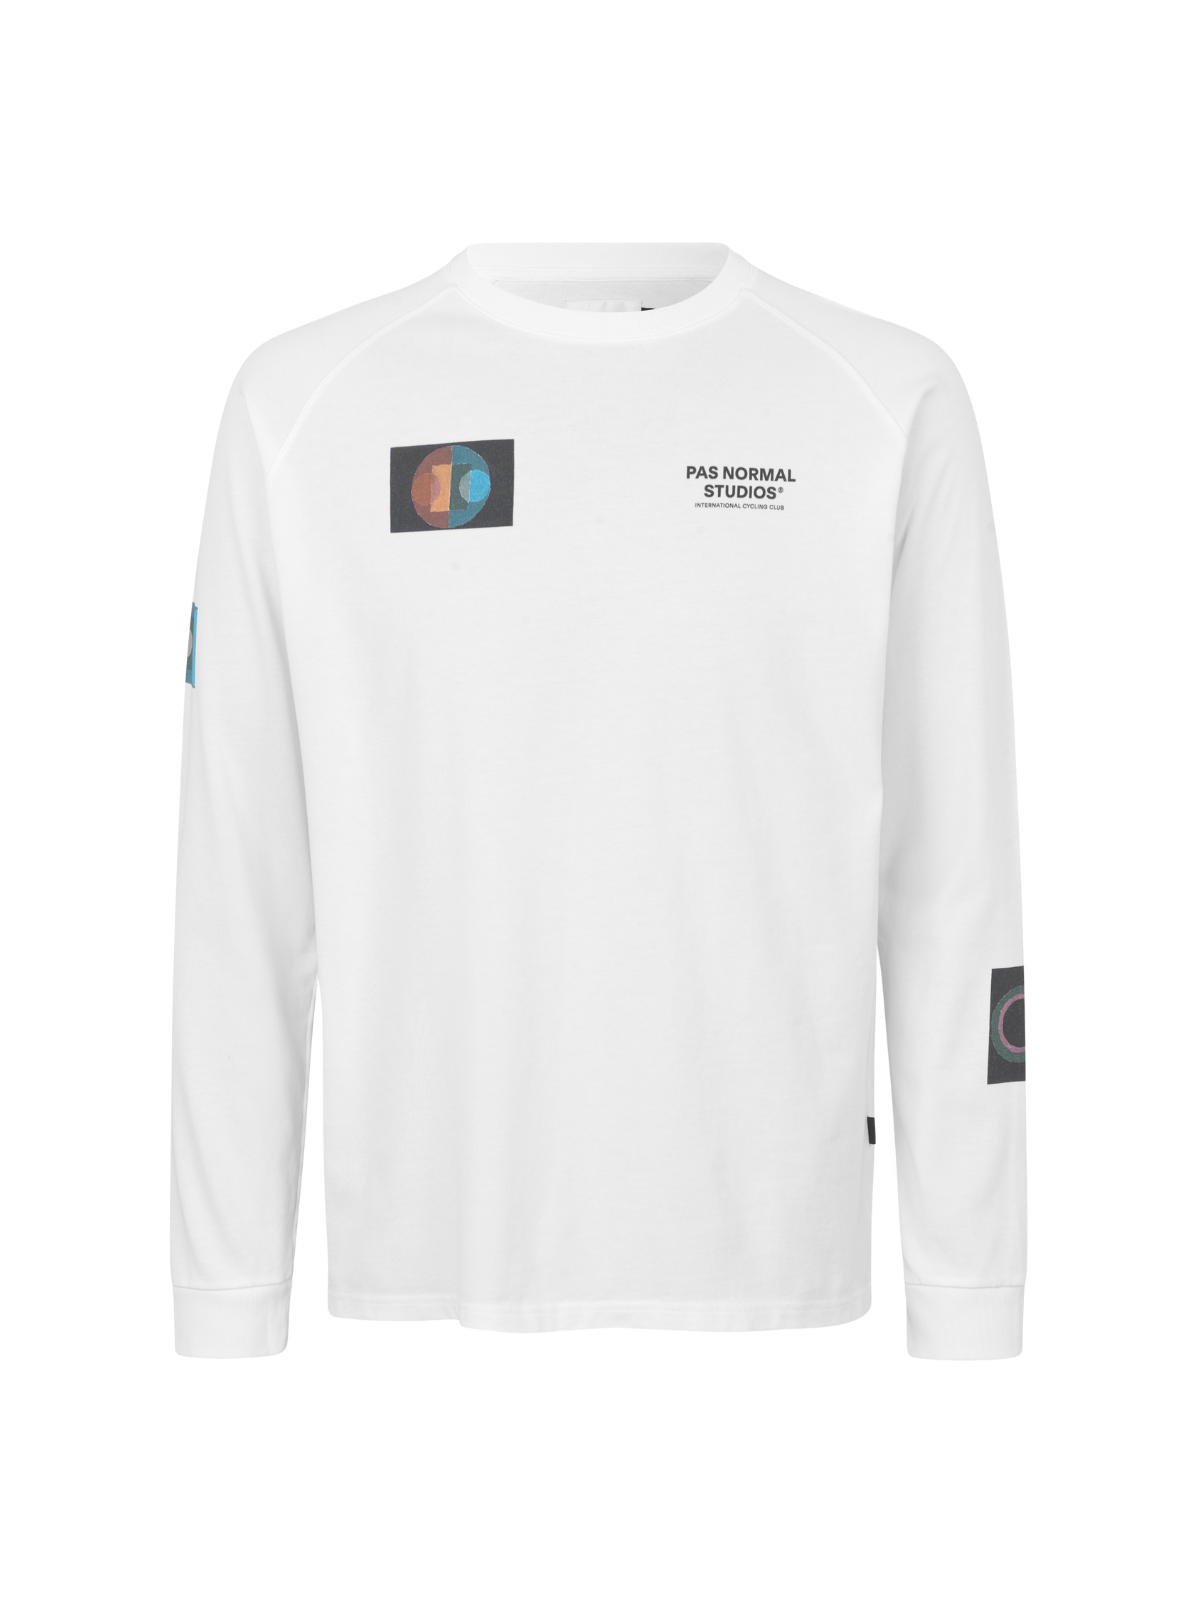 T.K.O. Off-Race Long Sleeve T-shirt - White - Pas Normal Studios